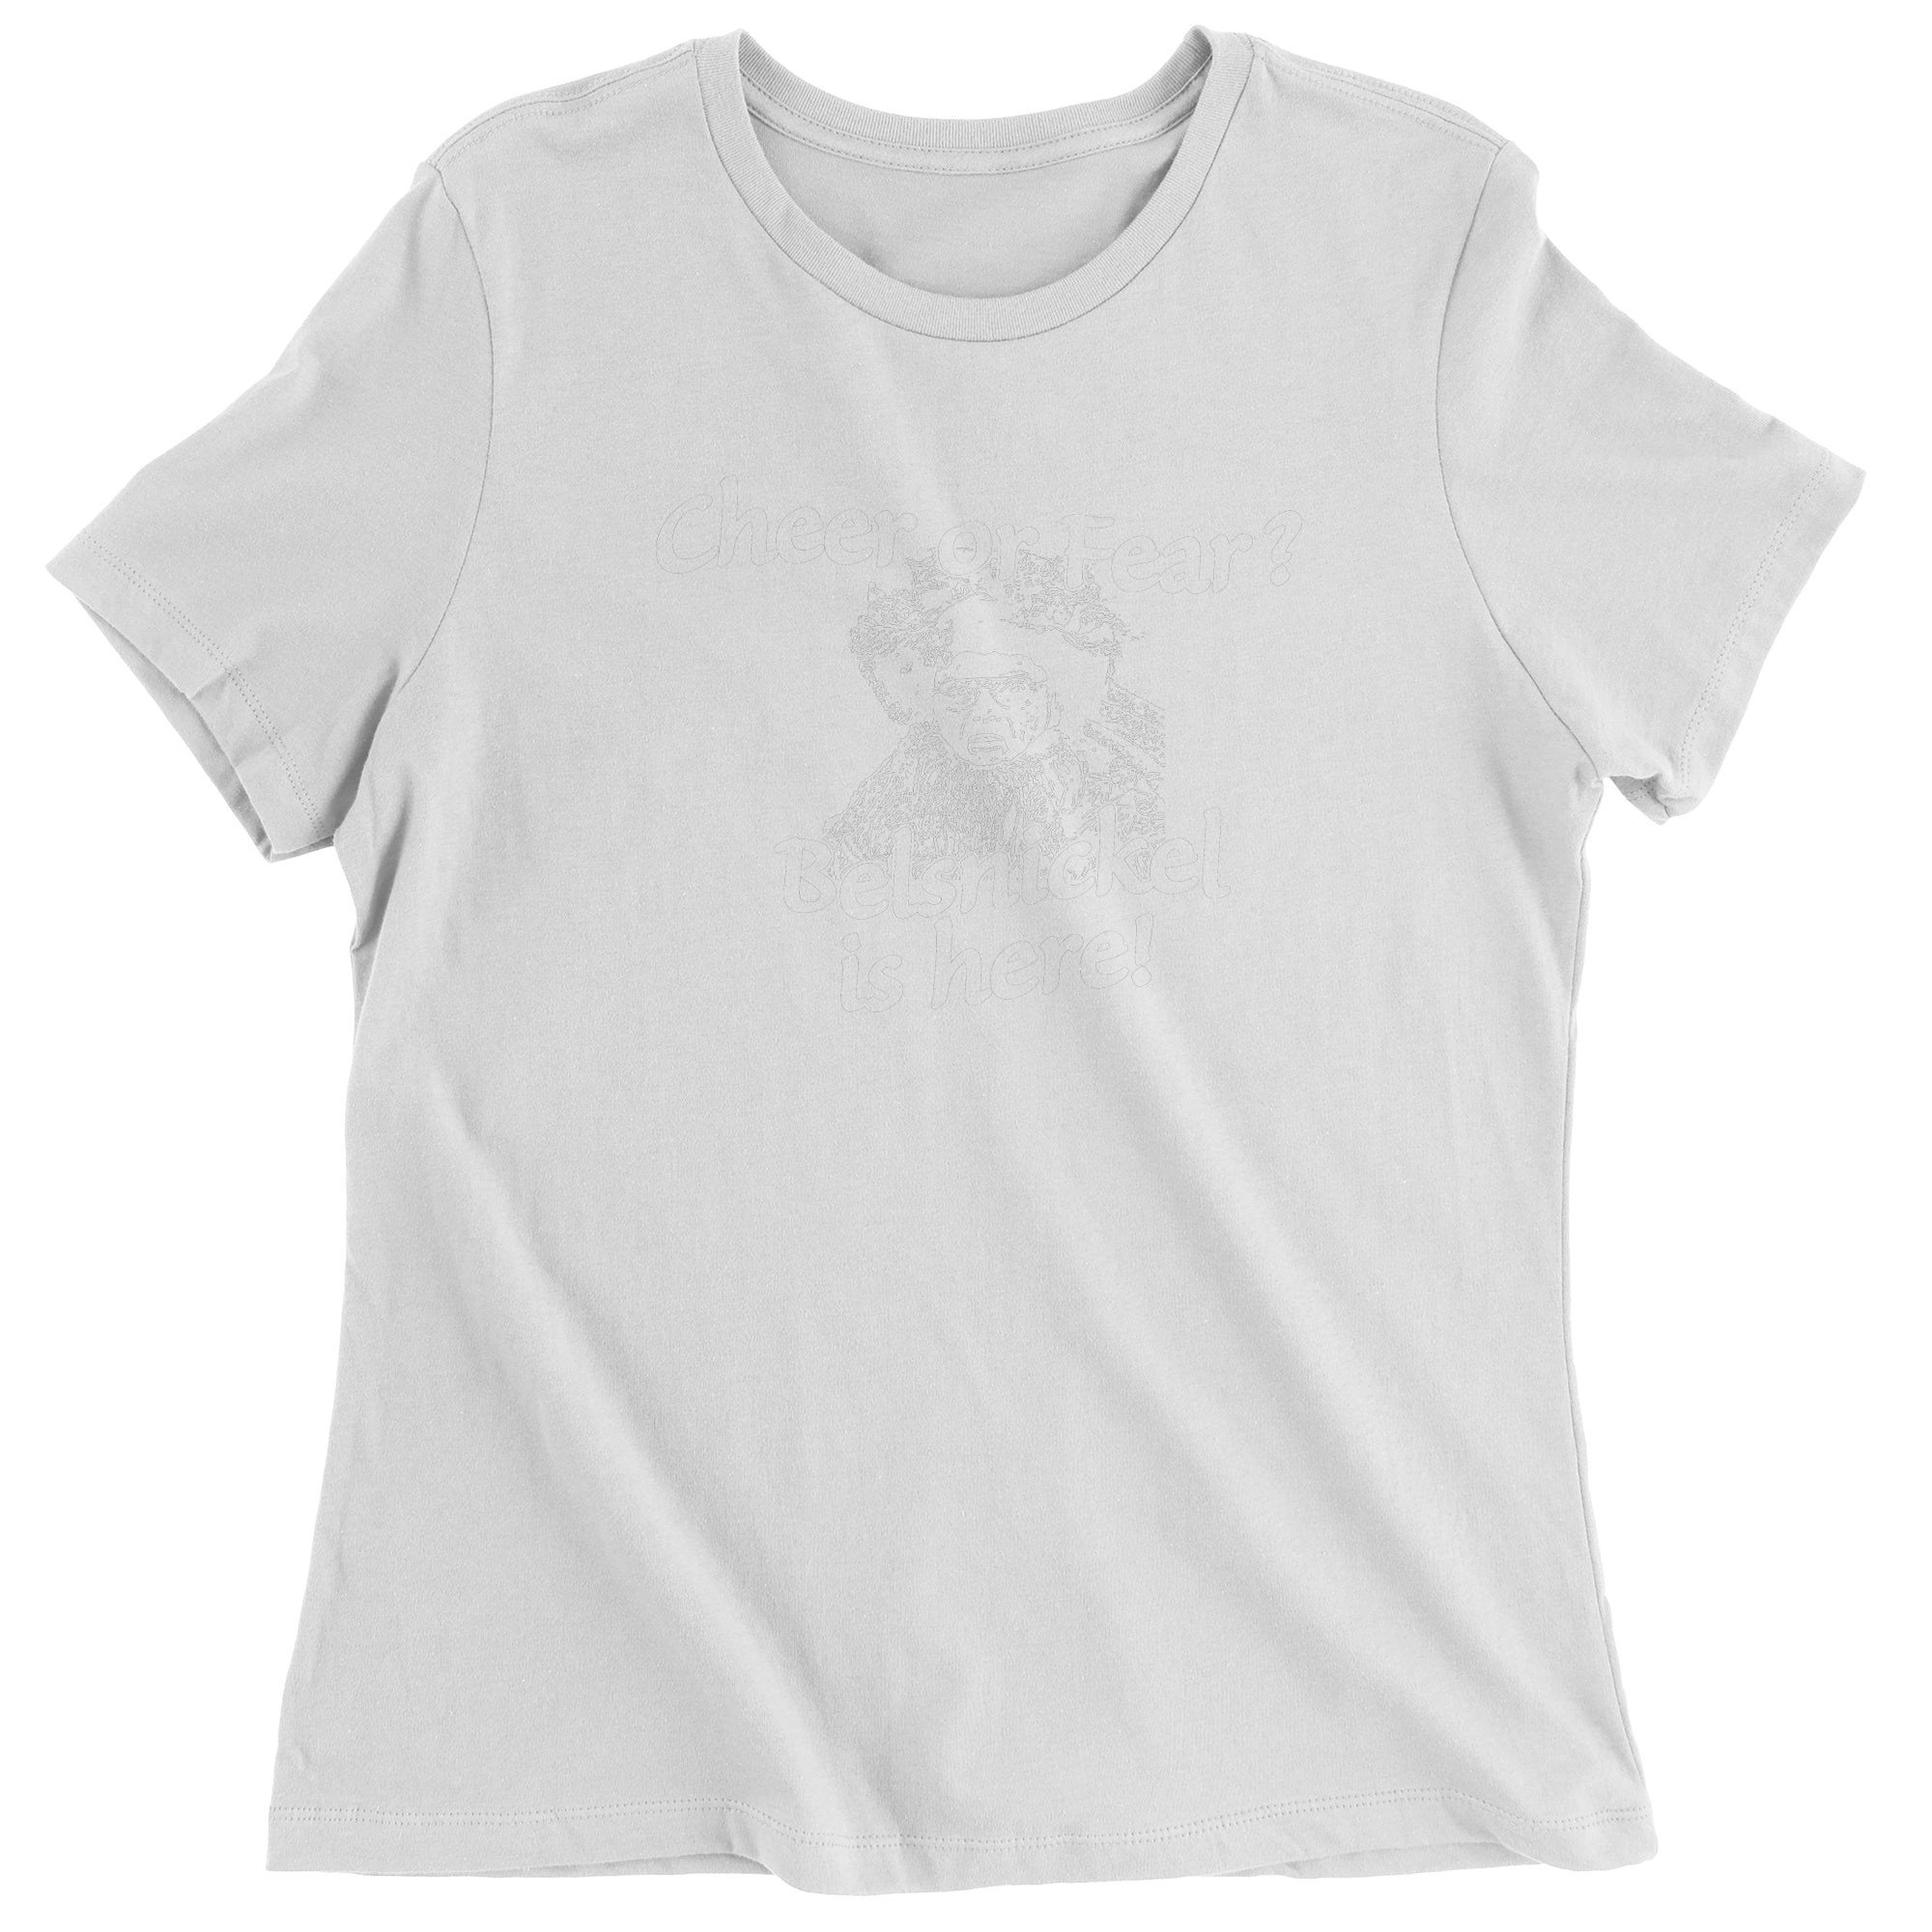 Belsnickel Cheer or Fear Women's T-Shirt